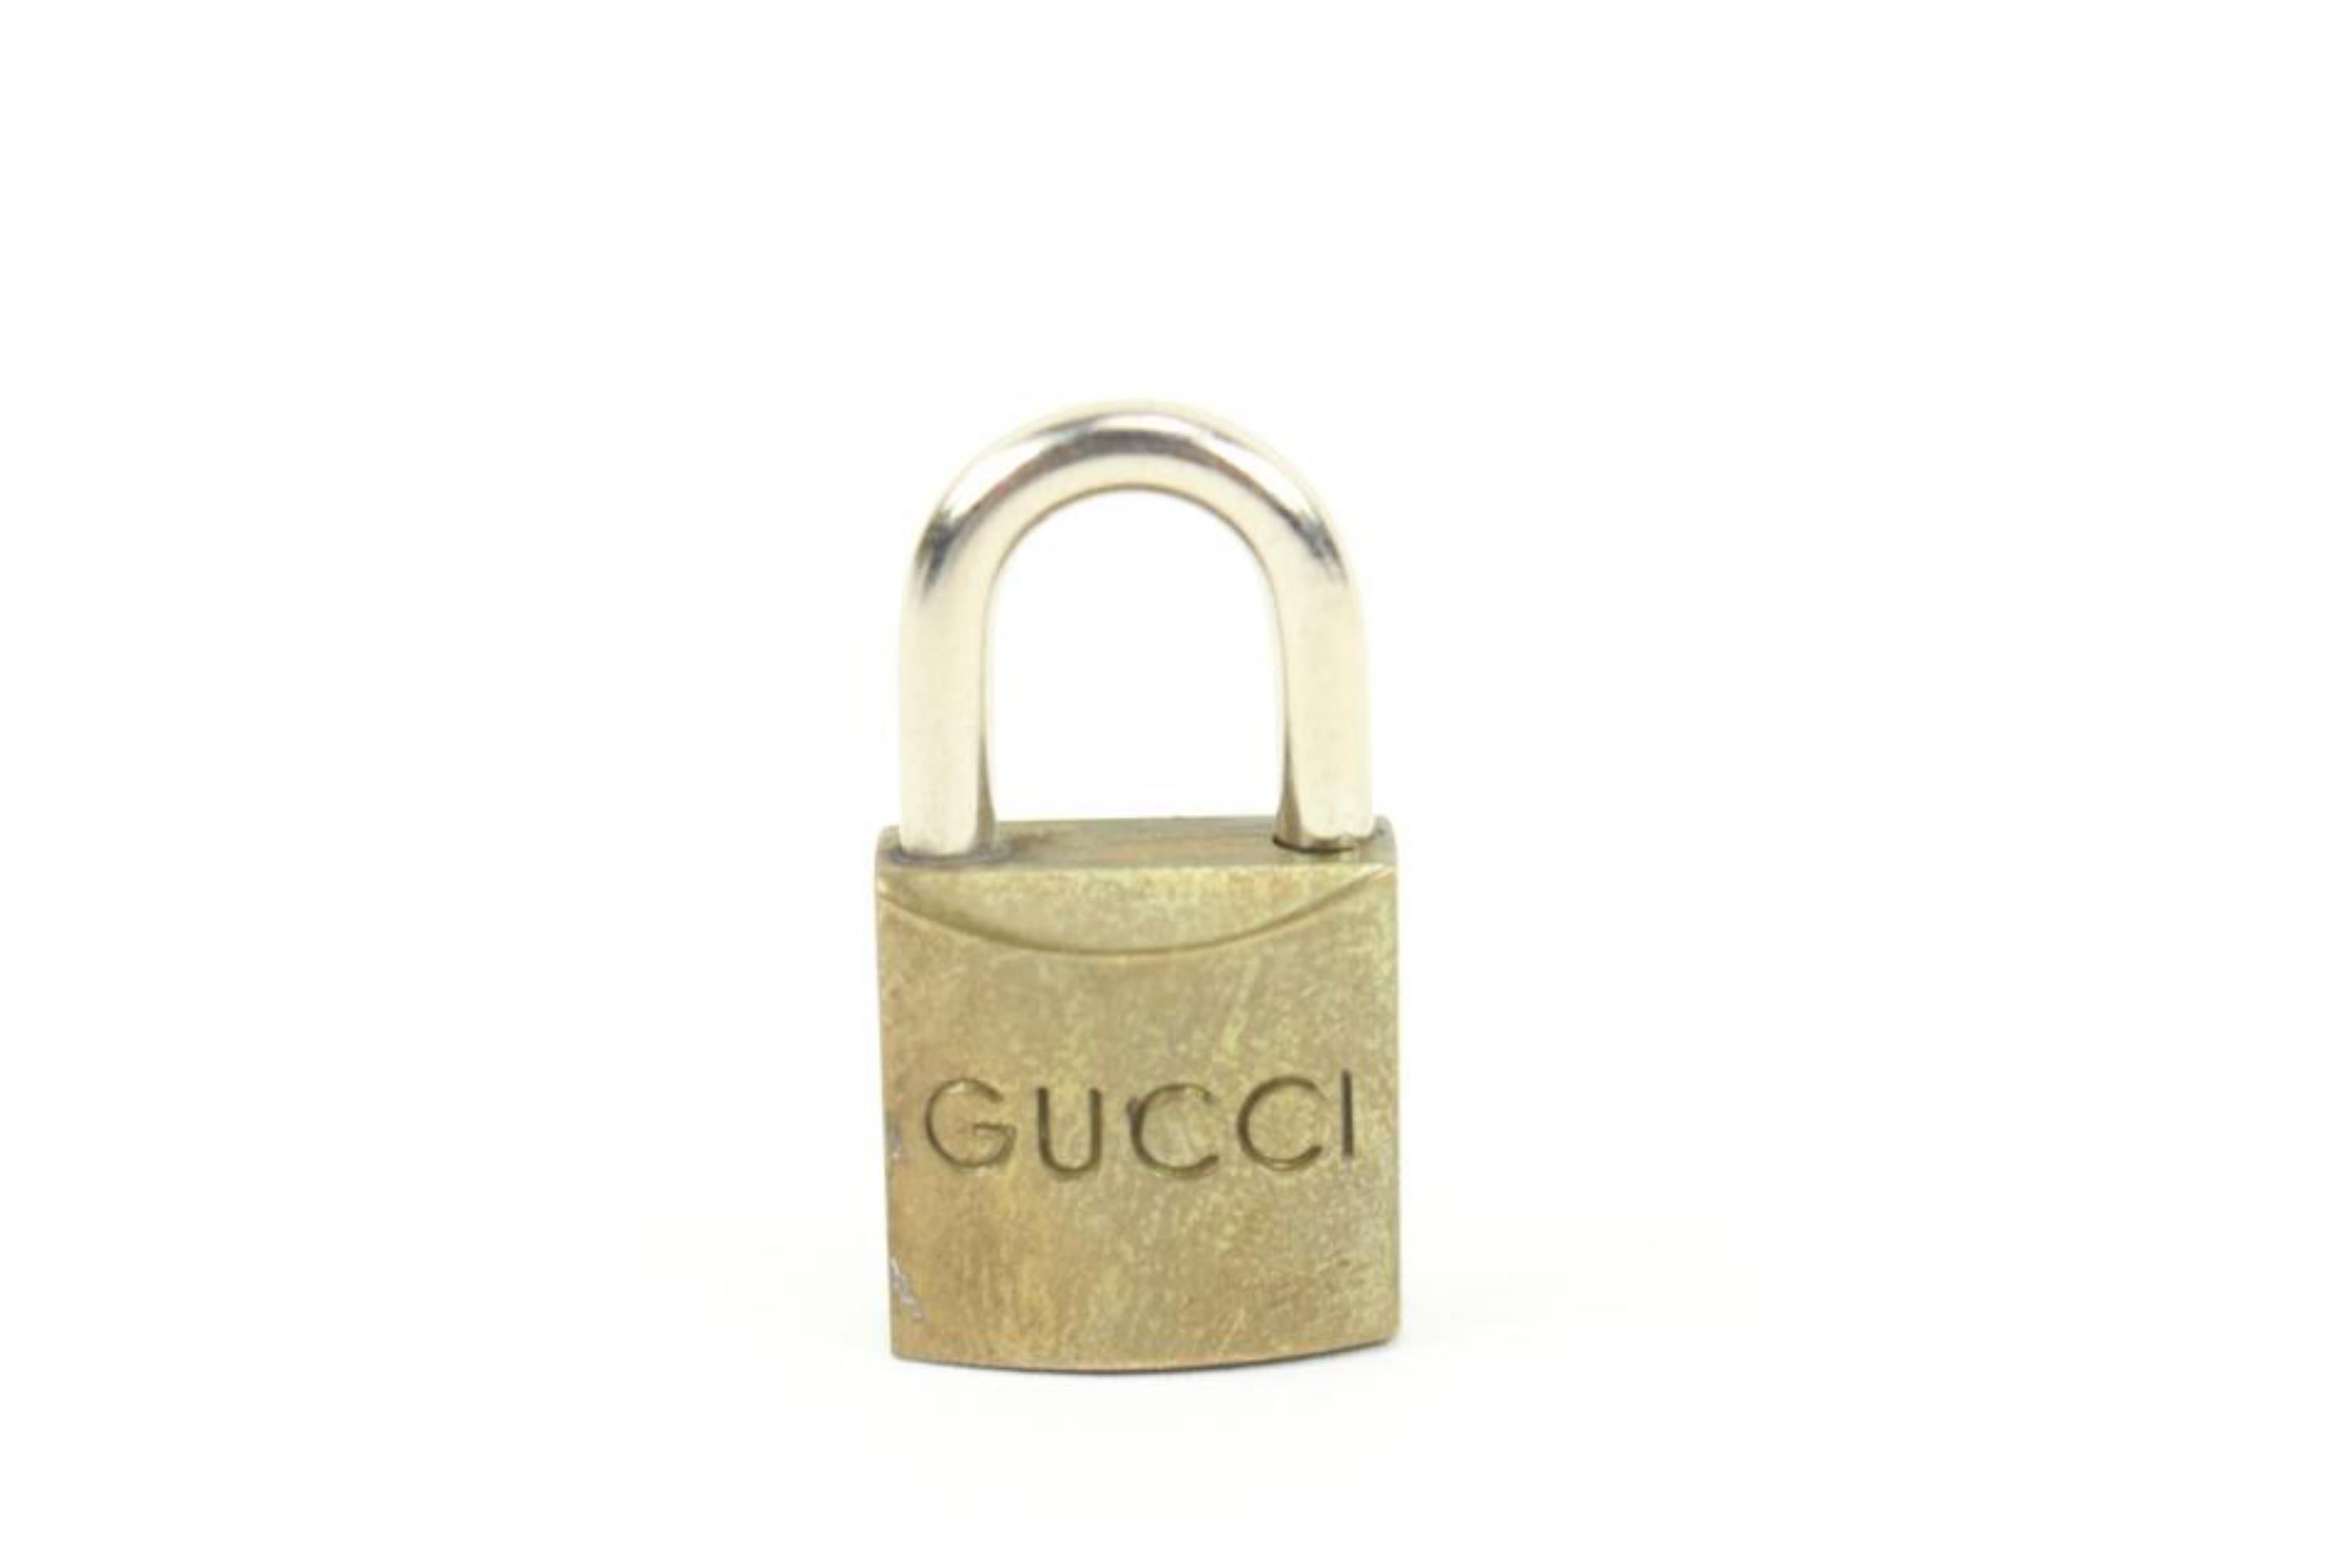 Gucci Brass GG Lock and Key Padlock Bag Charm Cadena 11g222s
Measurements: Length:  .6